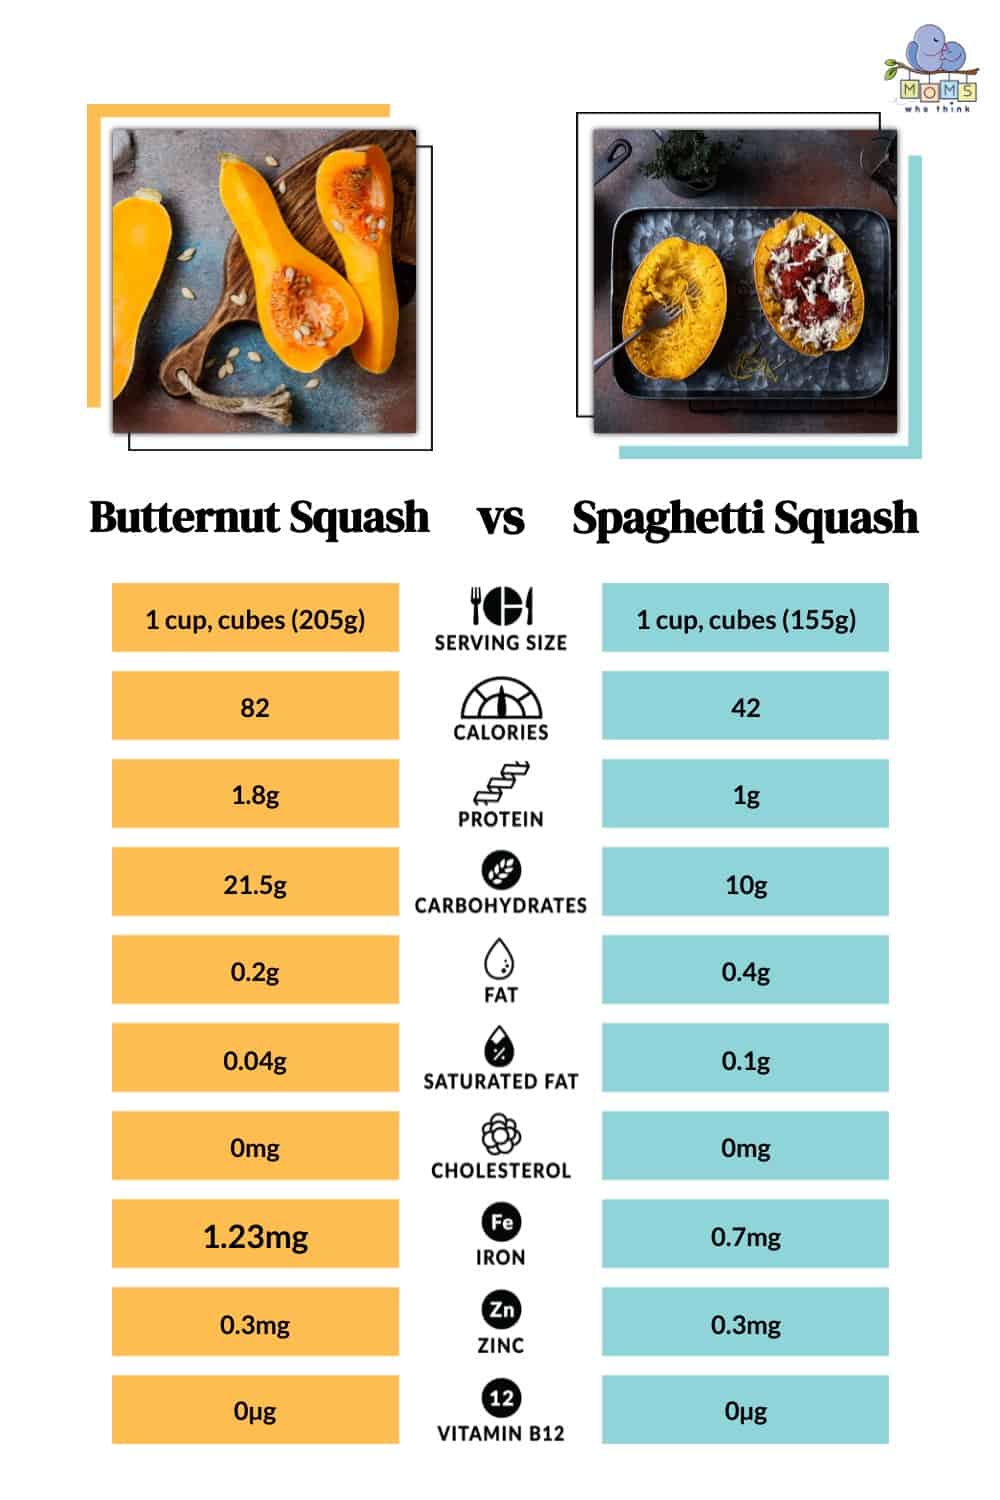 Butternut Squash vs Spaghetti Squash Nutrition